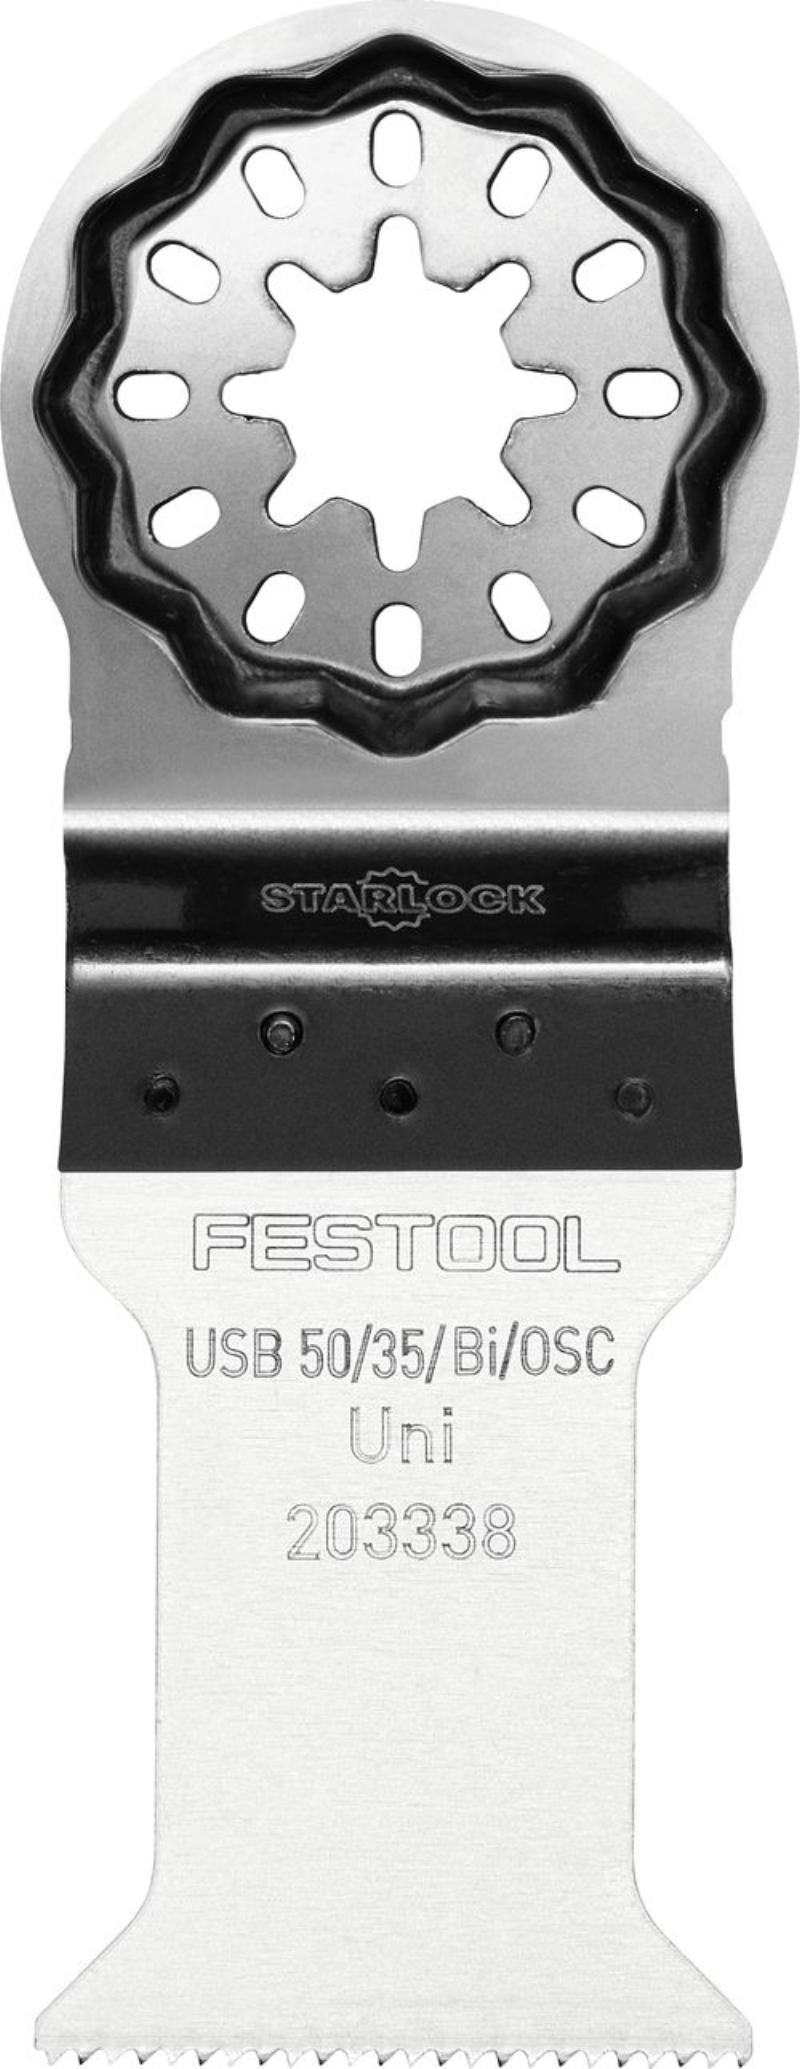 Festool Universal-savklinge USB 50/35/Bi/OSC, 1 stk